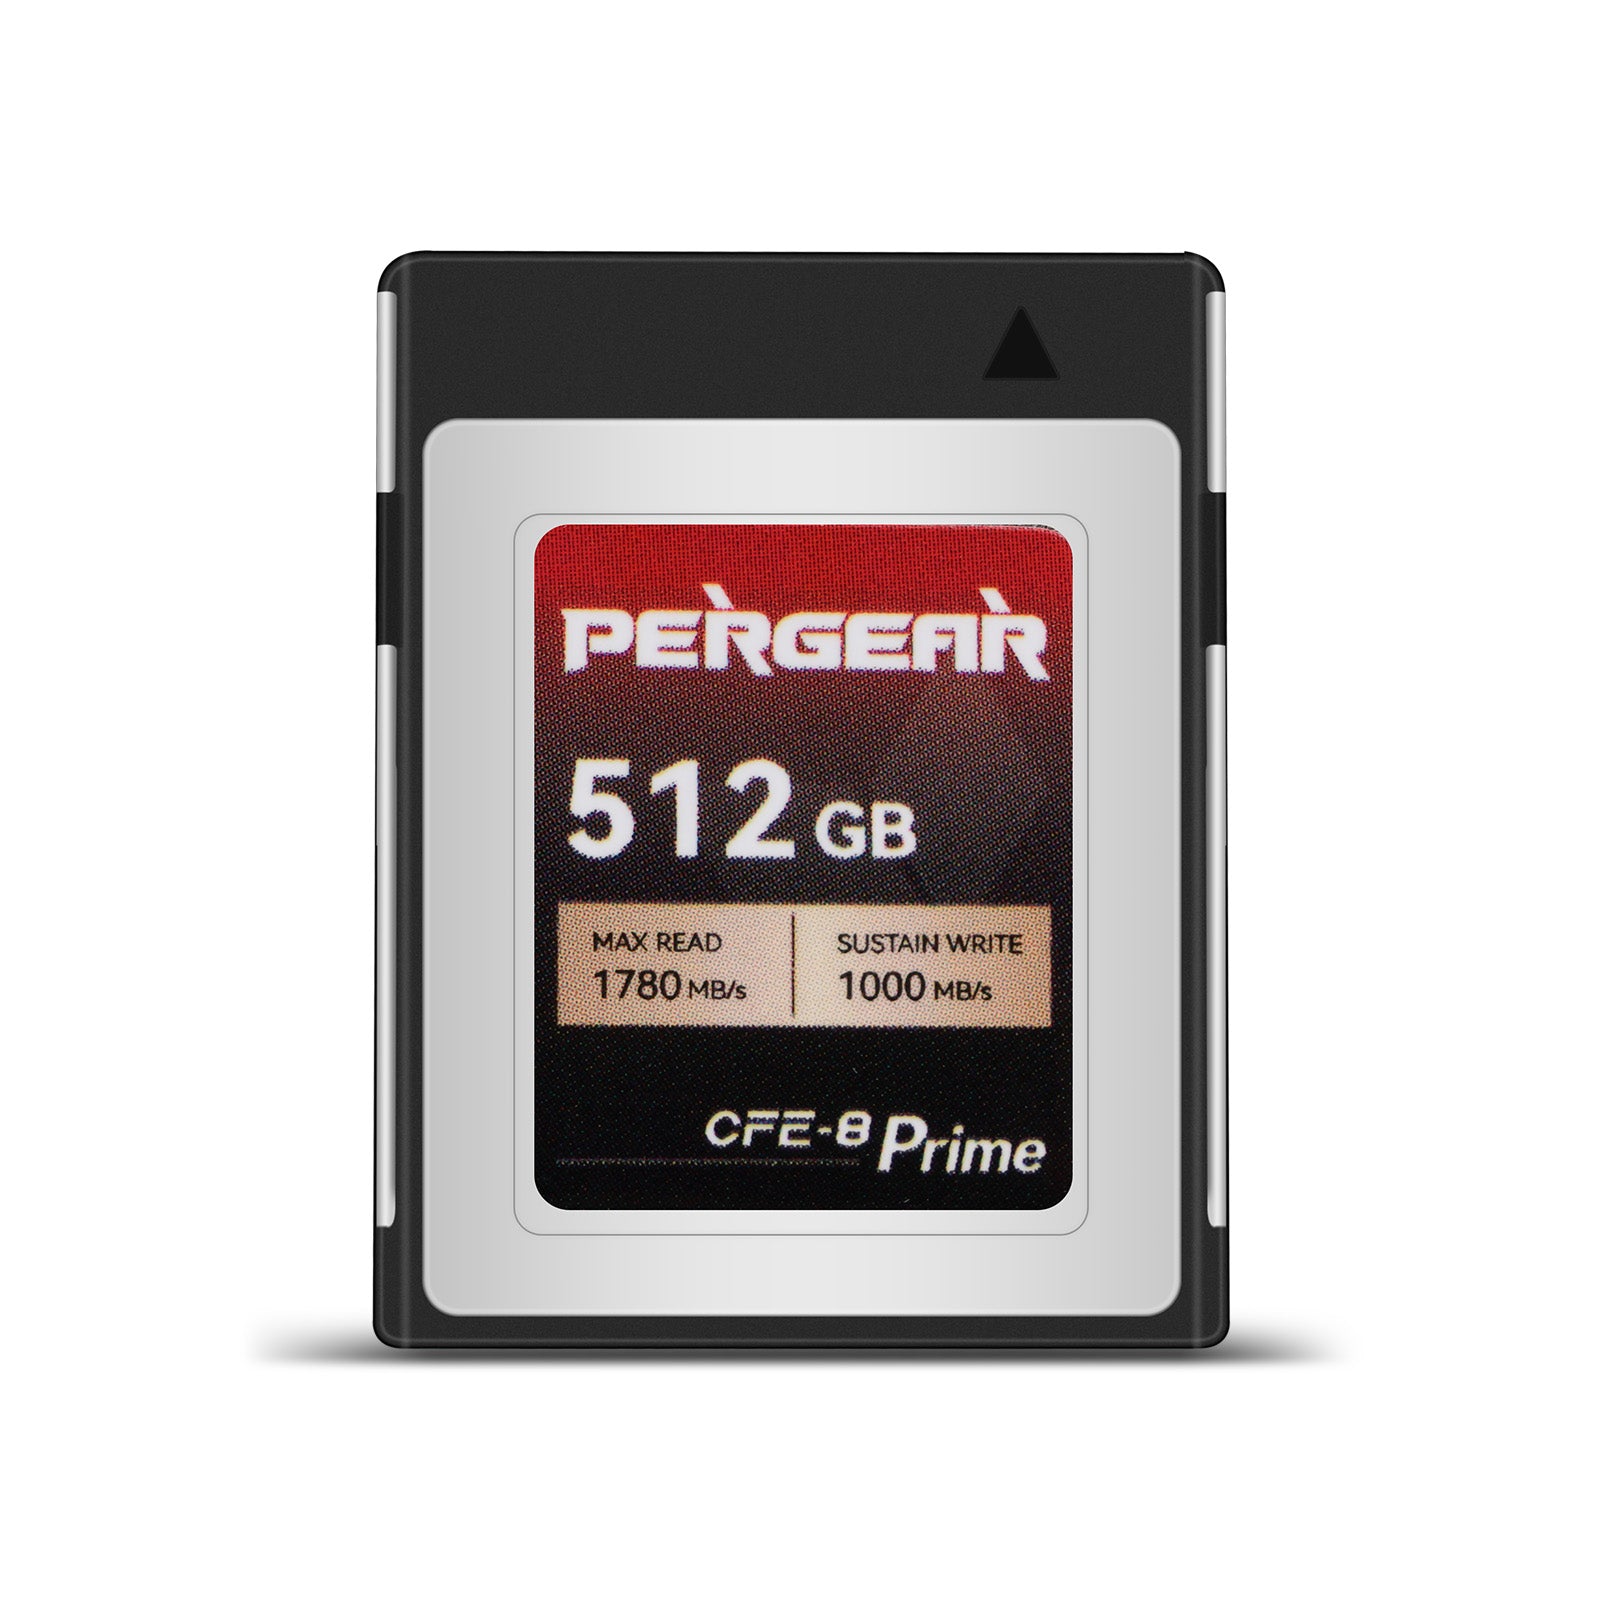 PERGEAR CFE-B プライム タイプB メモリカード (512GB) 1780MB 